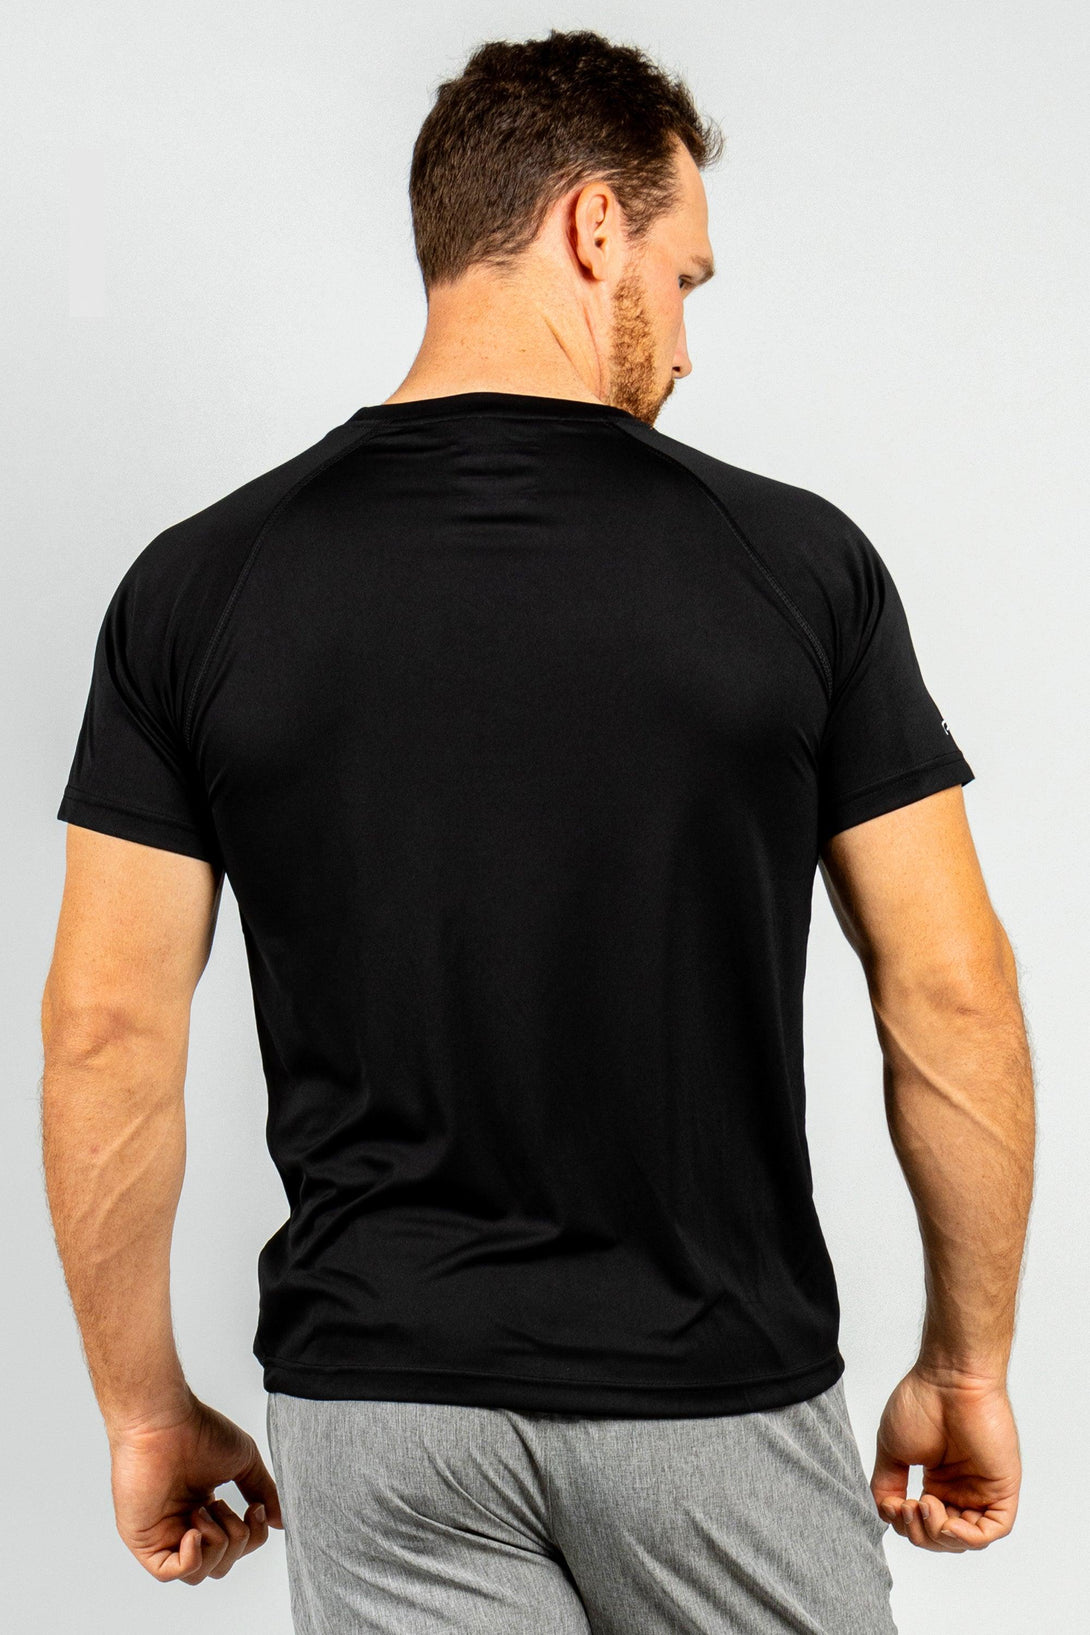 Performance T-Shirts | WHITE - BLACK - DARK GREY Pack of 3 - FTS